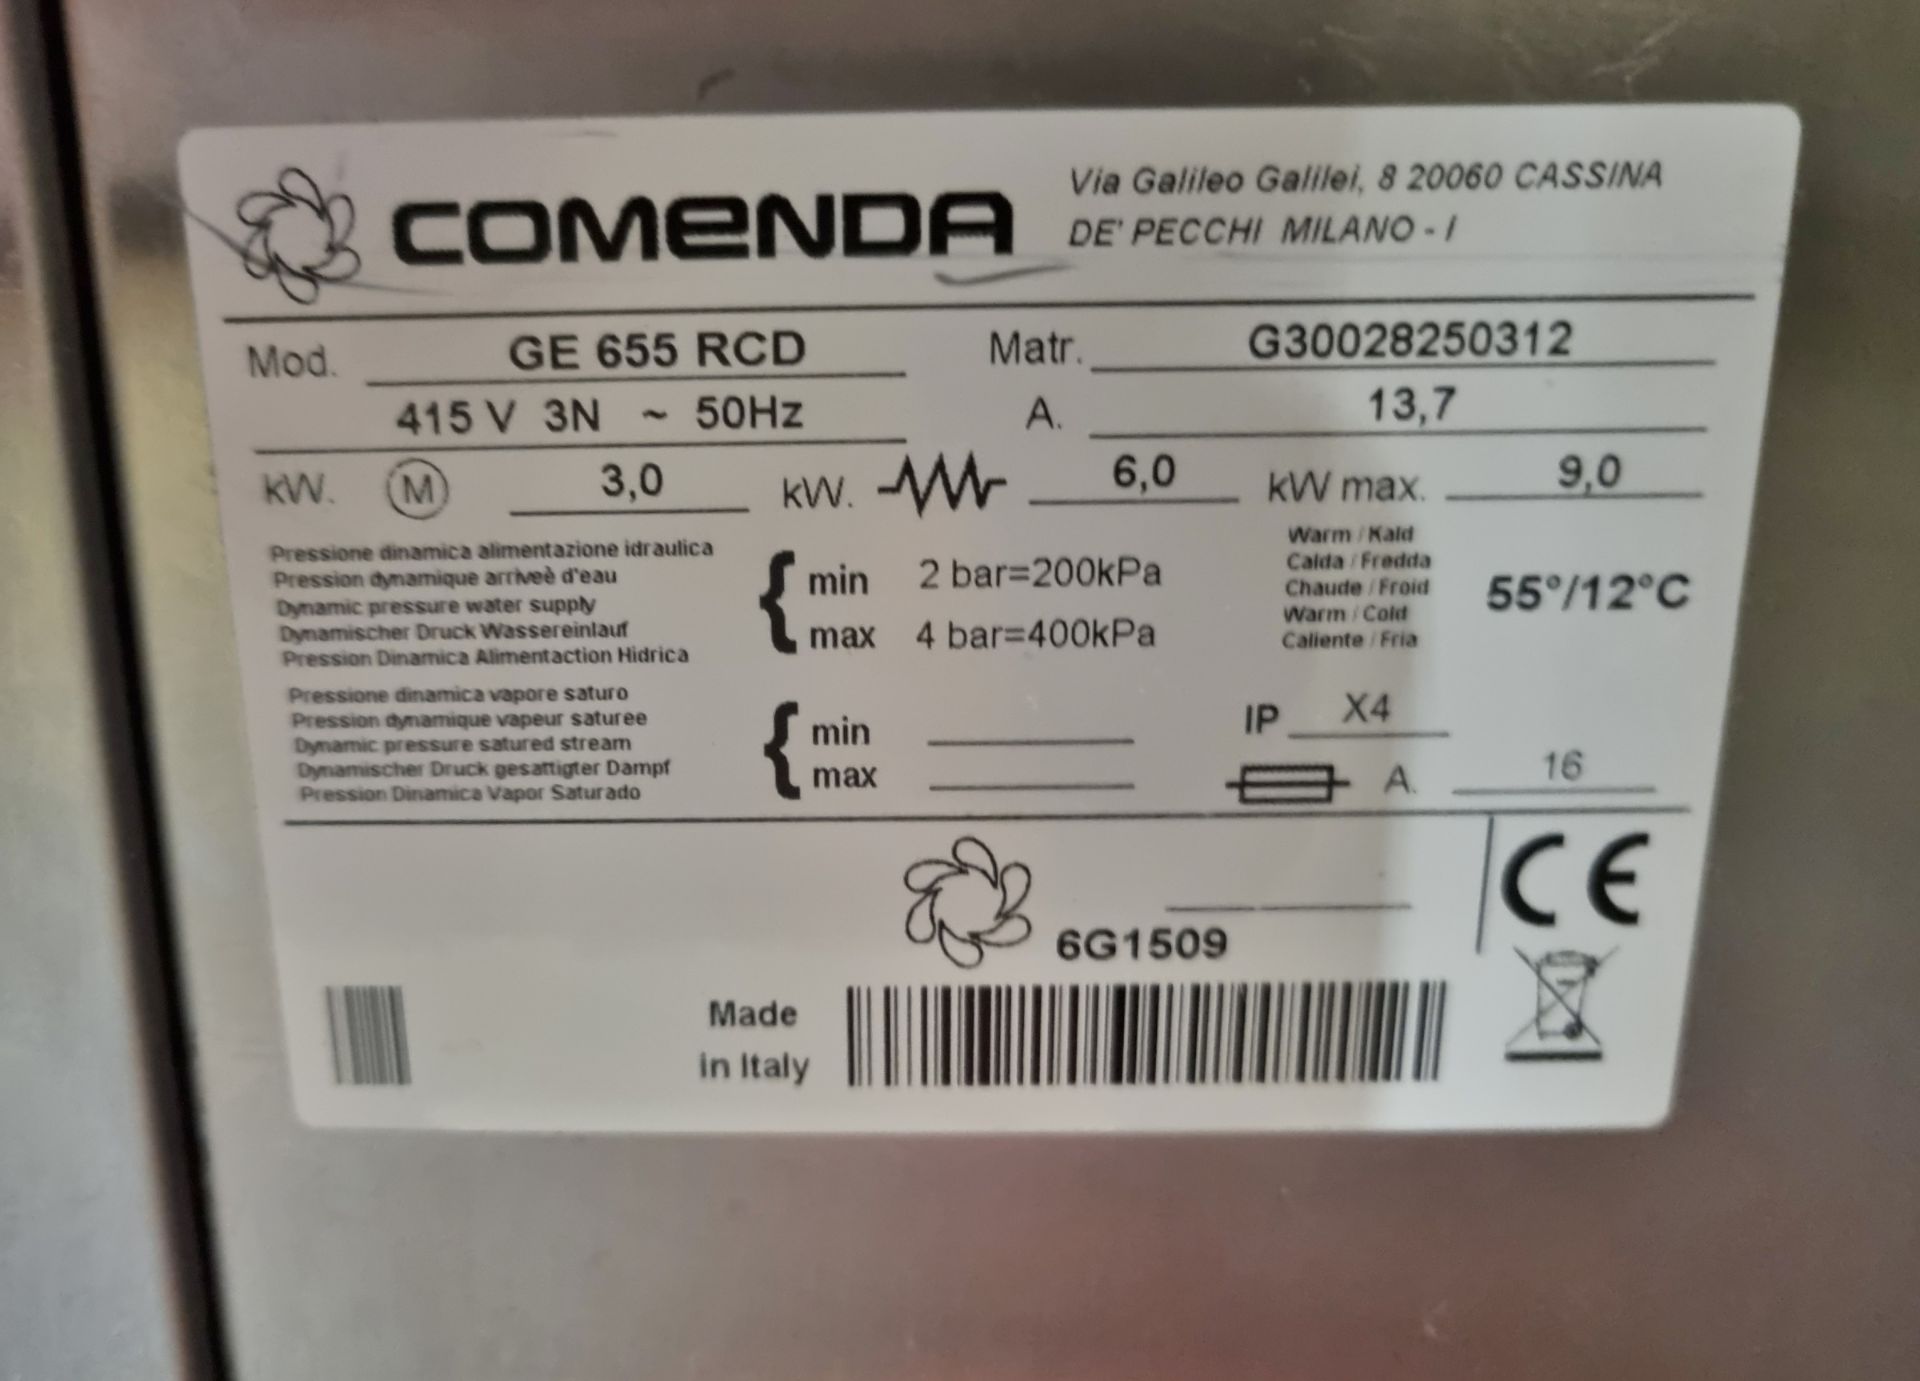 Comenda GE655 RCD hood-type dishwasher - Image 5 of 5